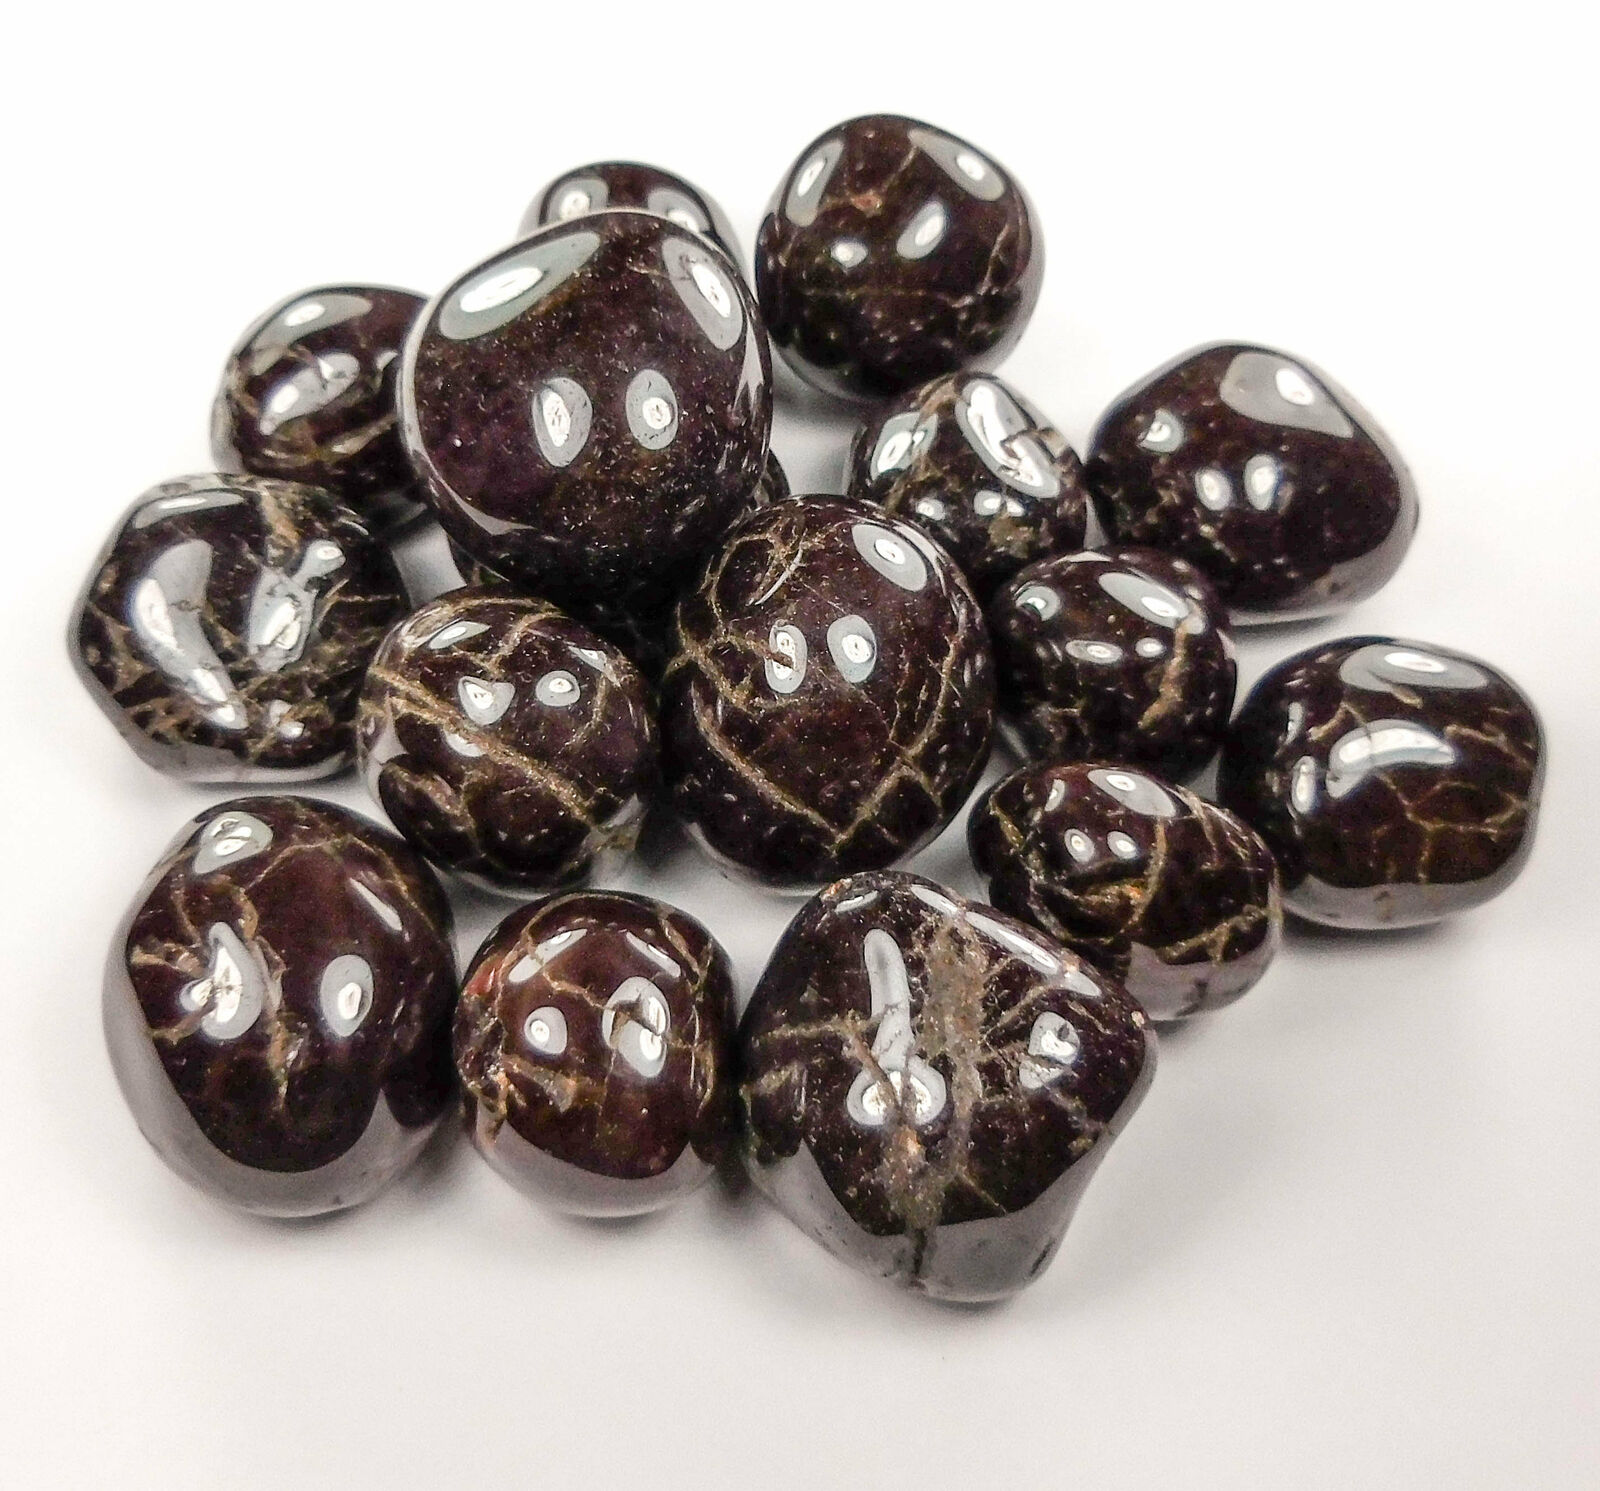 Cherry Garnet (3 Pcs) Tumbled Gemstone - Polished Crystal Dark Red Gemstones